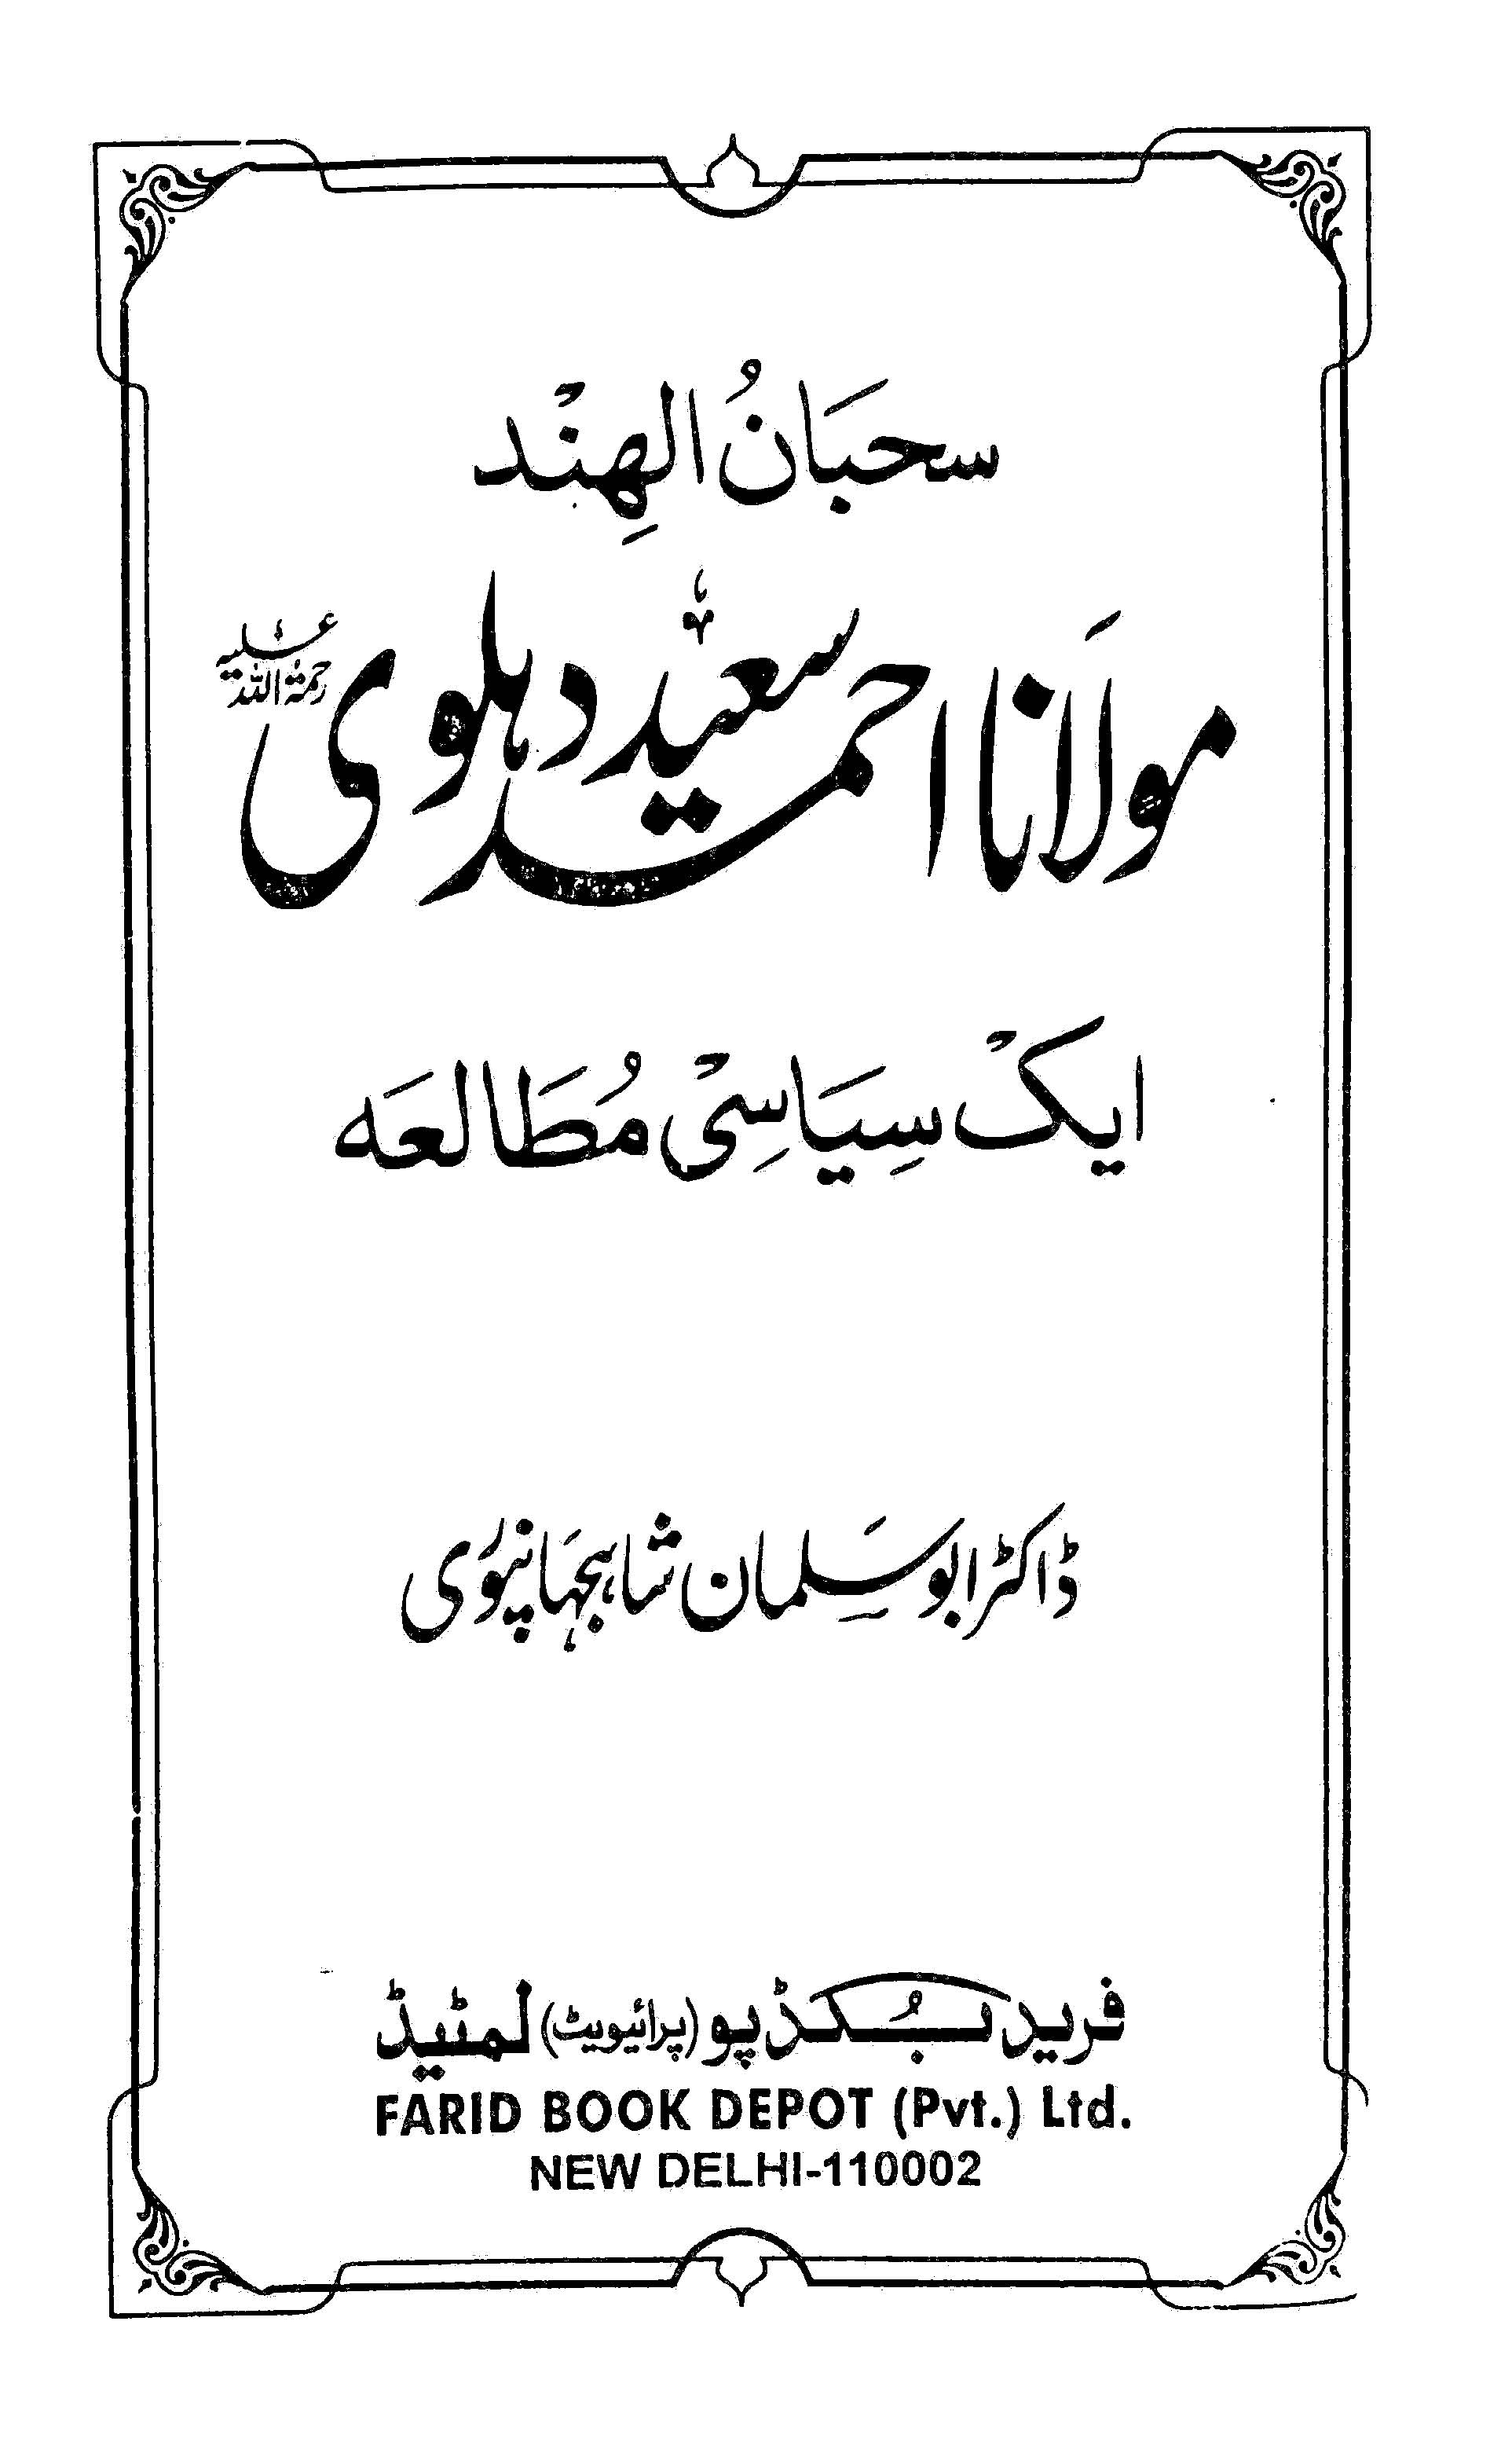 Sahban ul Hind Maulana Ahmad Saeed Dehlvi ra - Aik Siyasi Mutalia,Dr. Abu Salman Shahjahanpuri